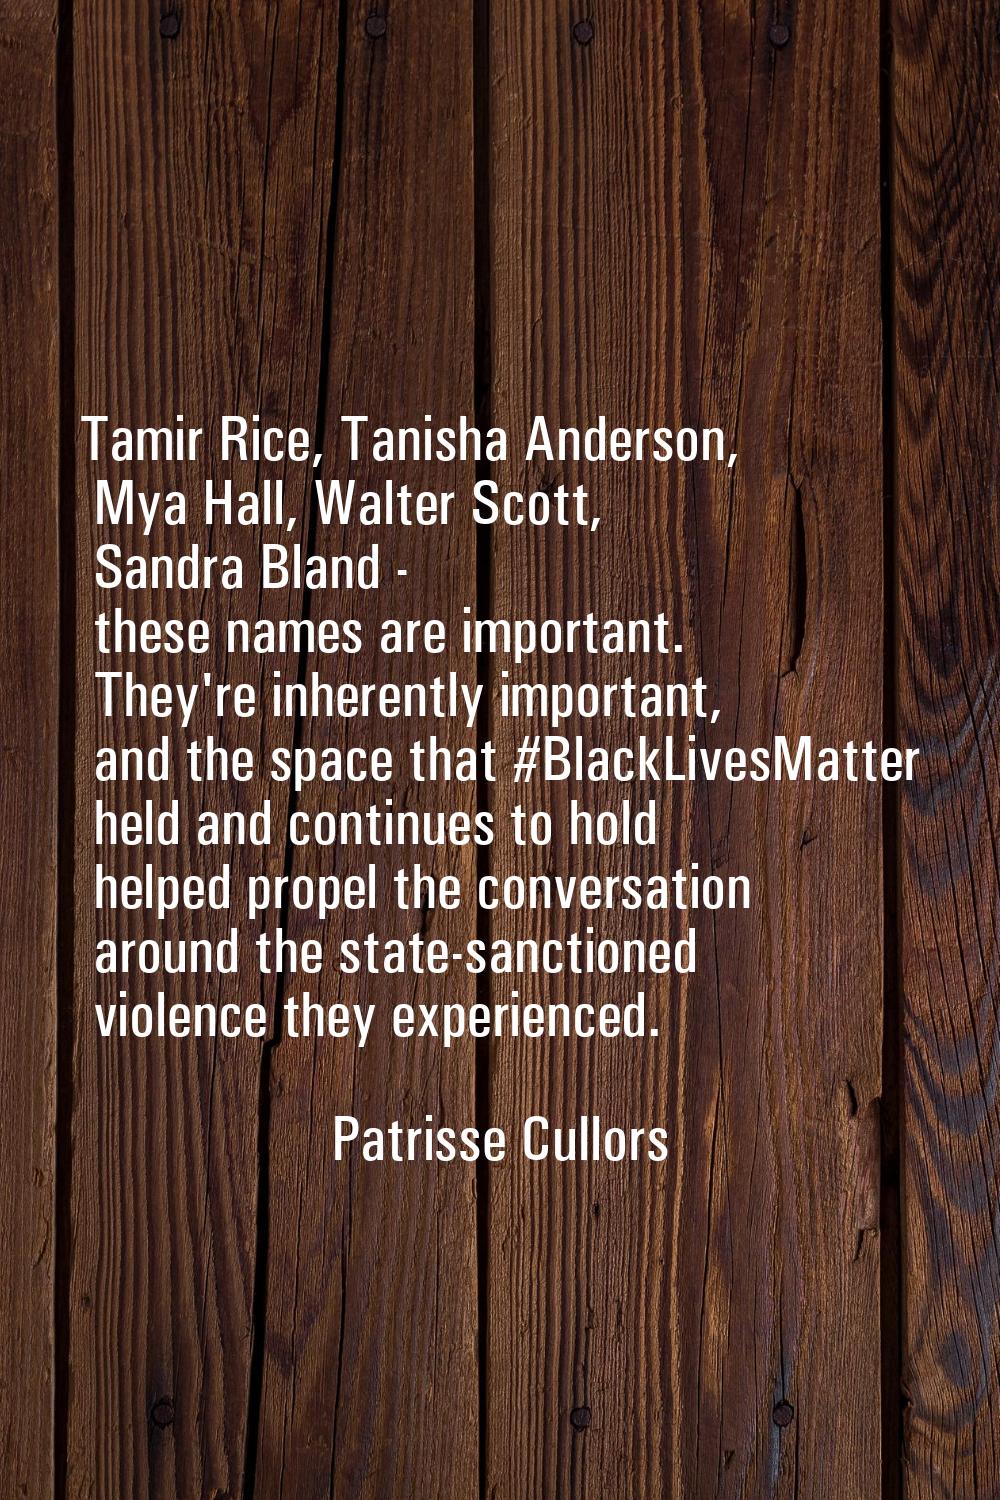 Tamir Rice, Tanisha Anderson, Mya Hall, Walter Scott, Sandra Bland - these names are important. The